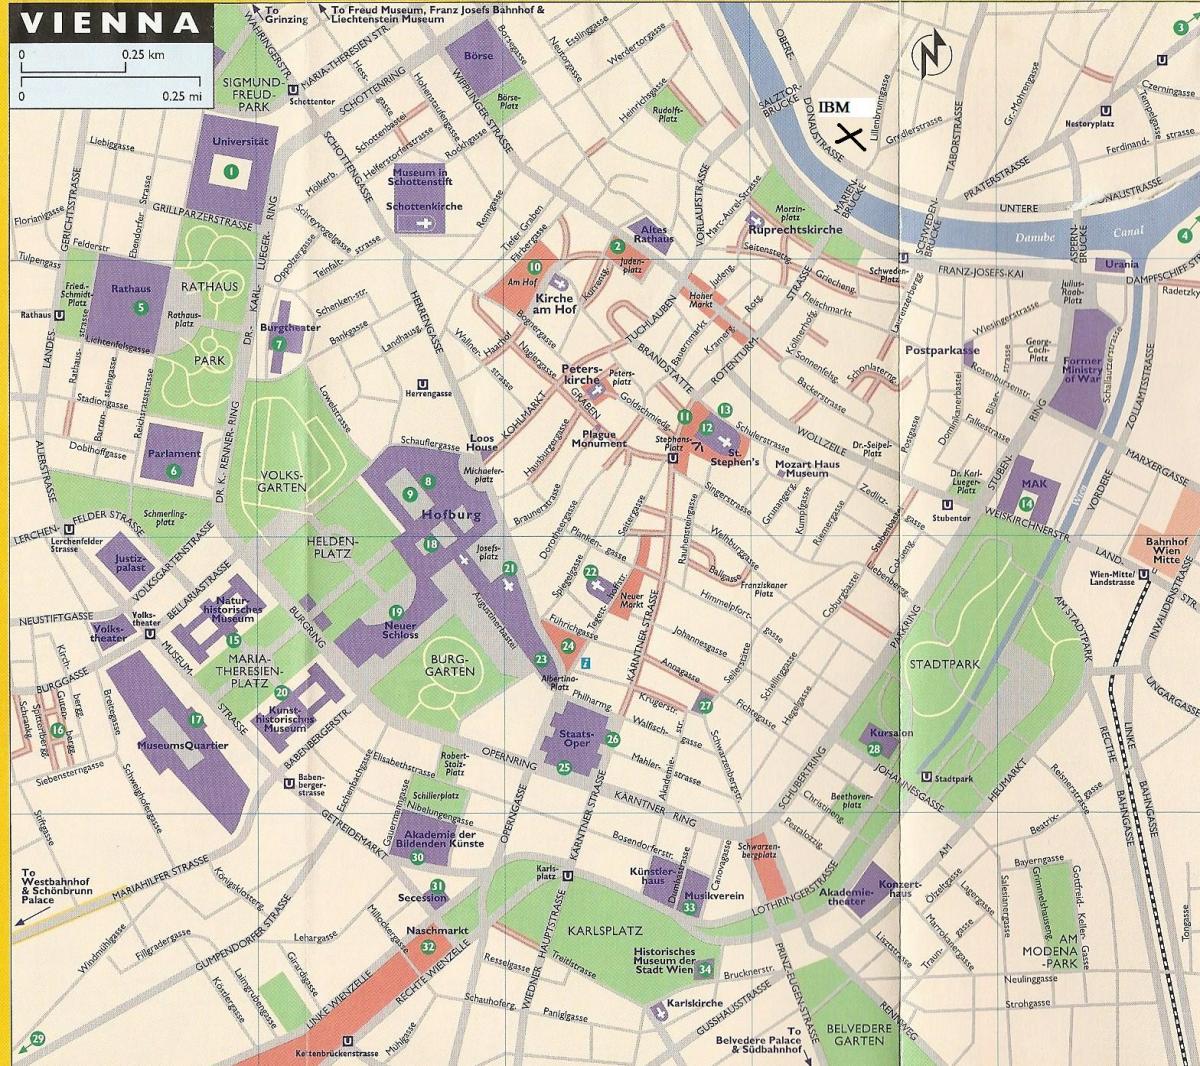 Kart over varehus i Wien 